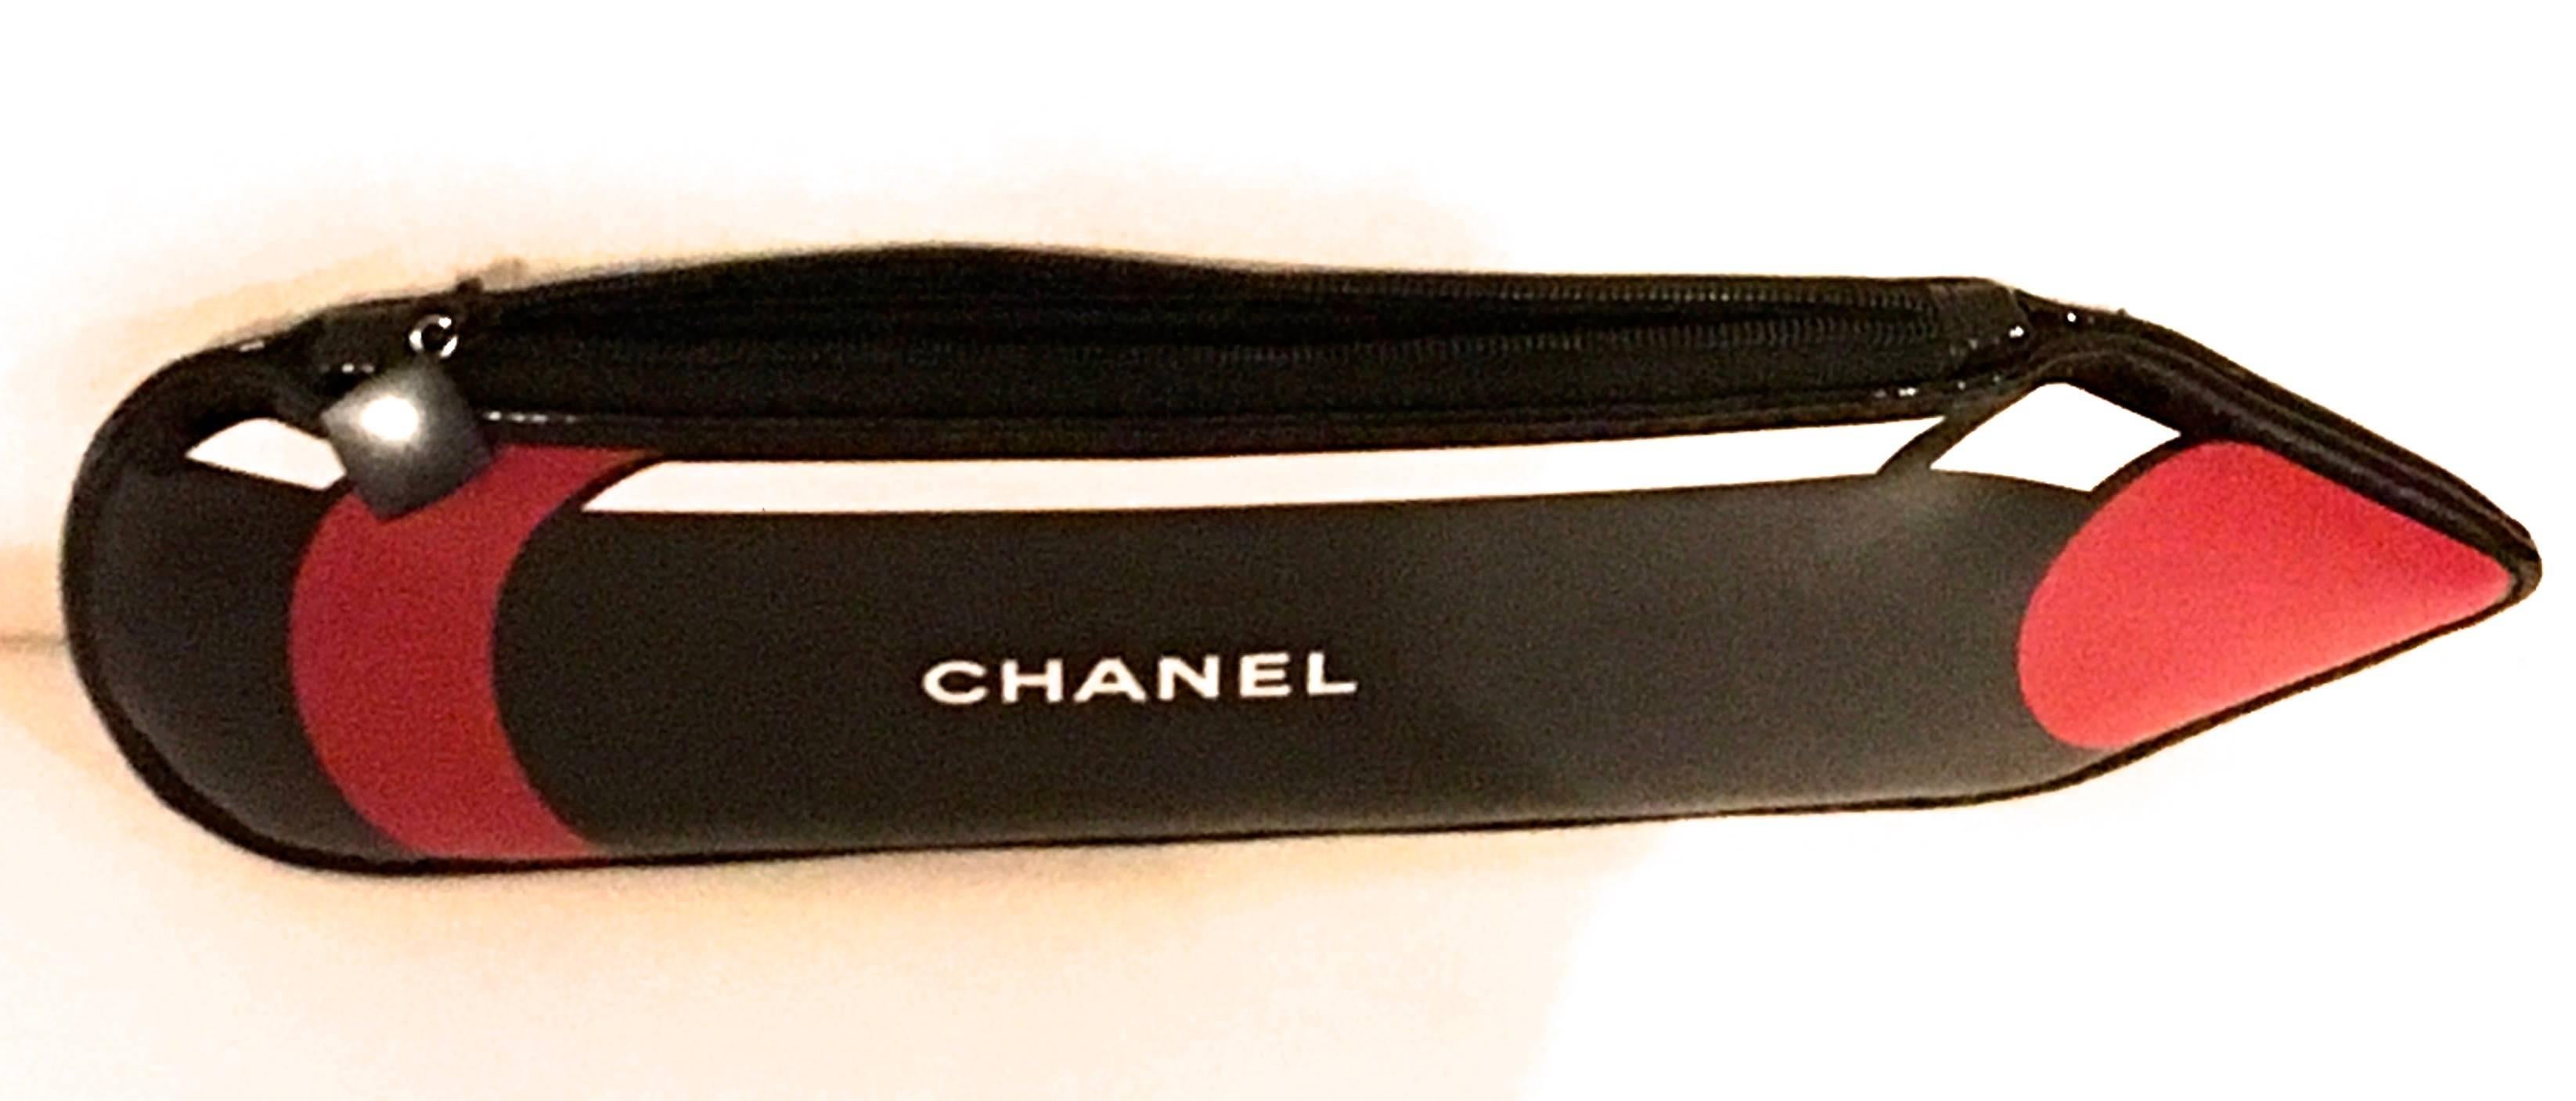 Black Chanel Makeup Bag